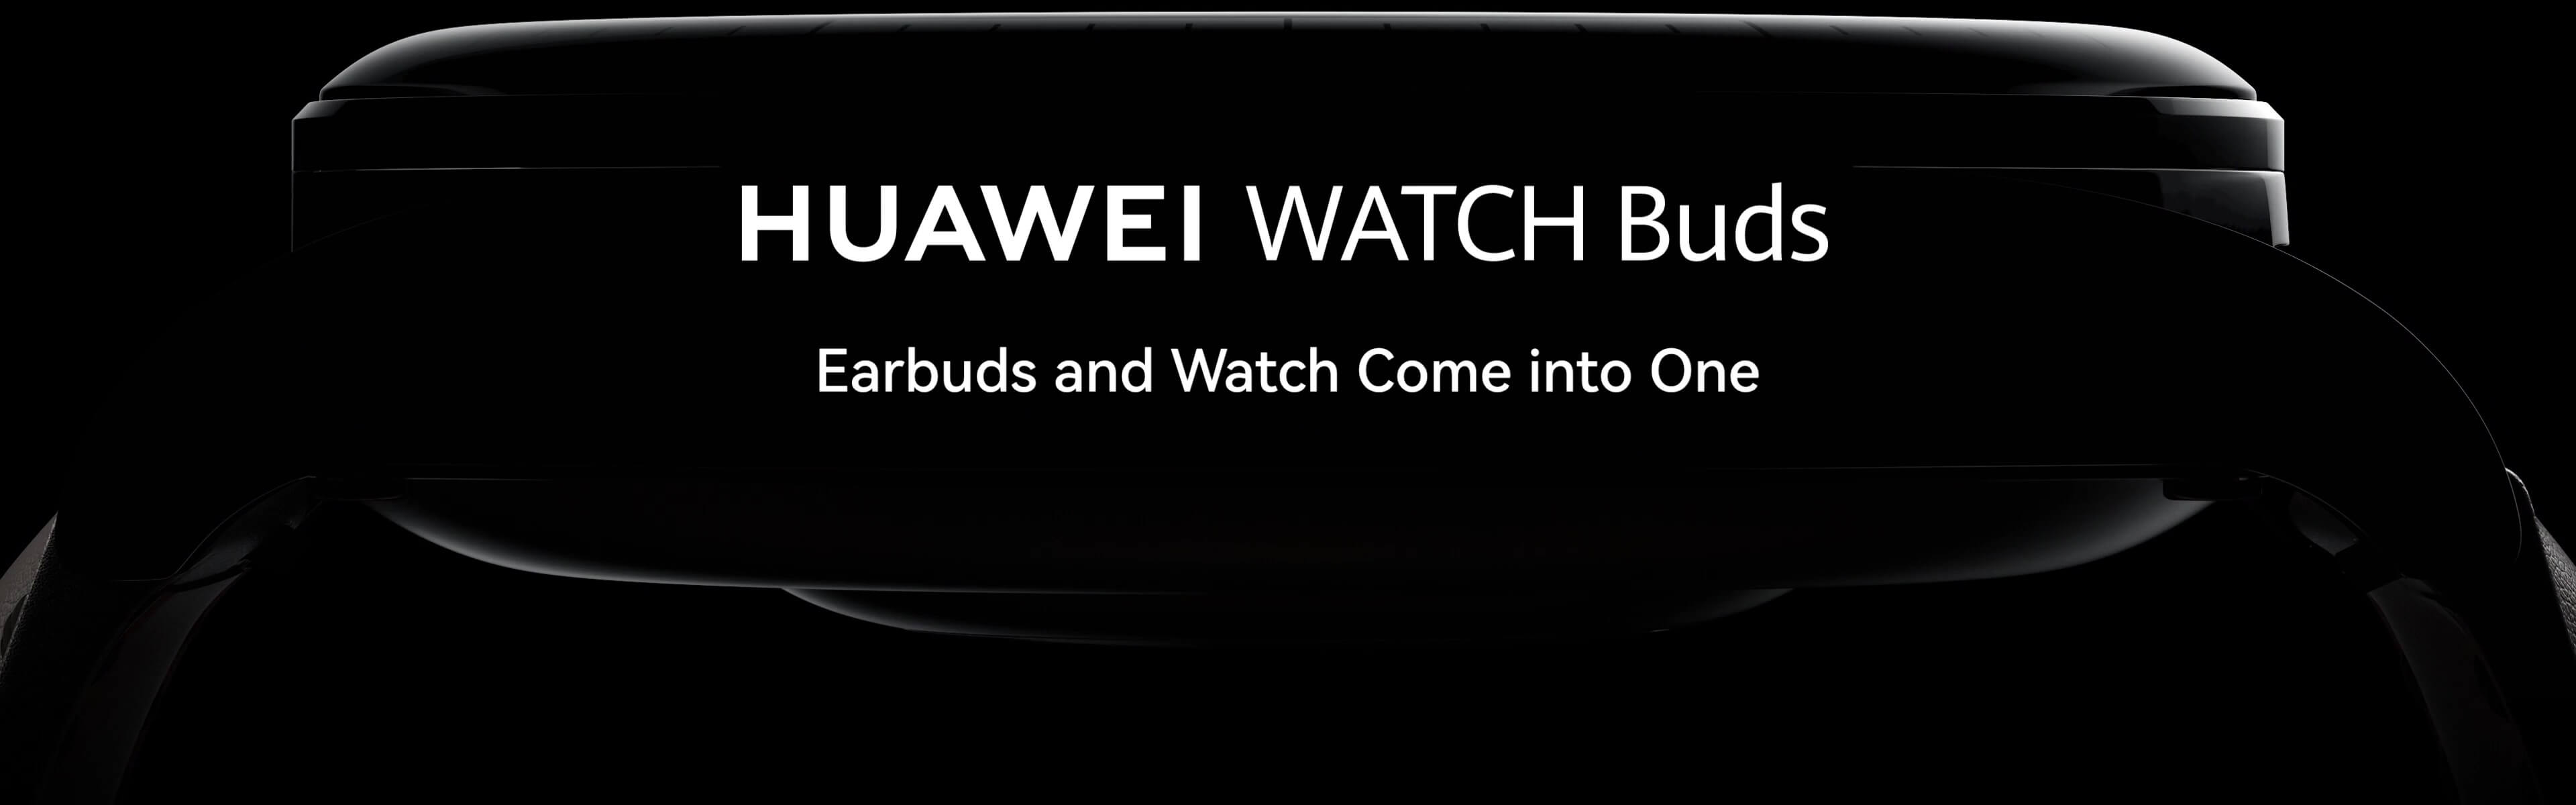 HUAWEI WATCH Buds Key Vision